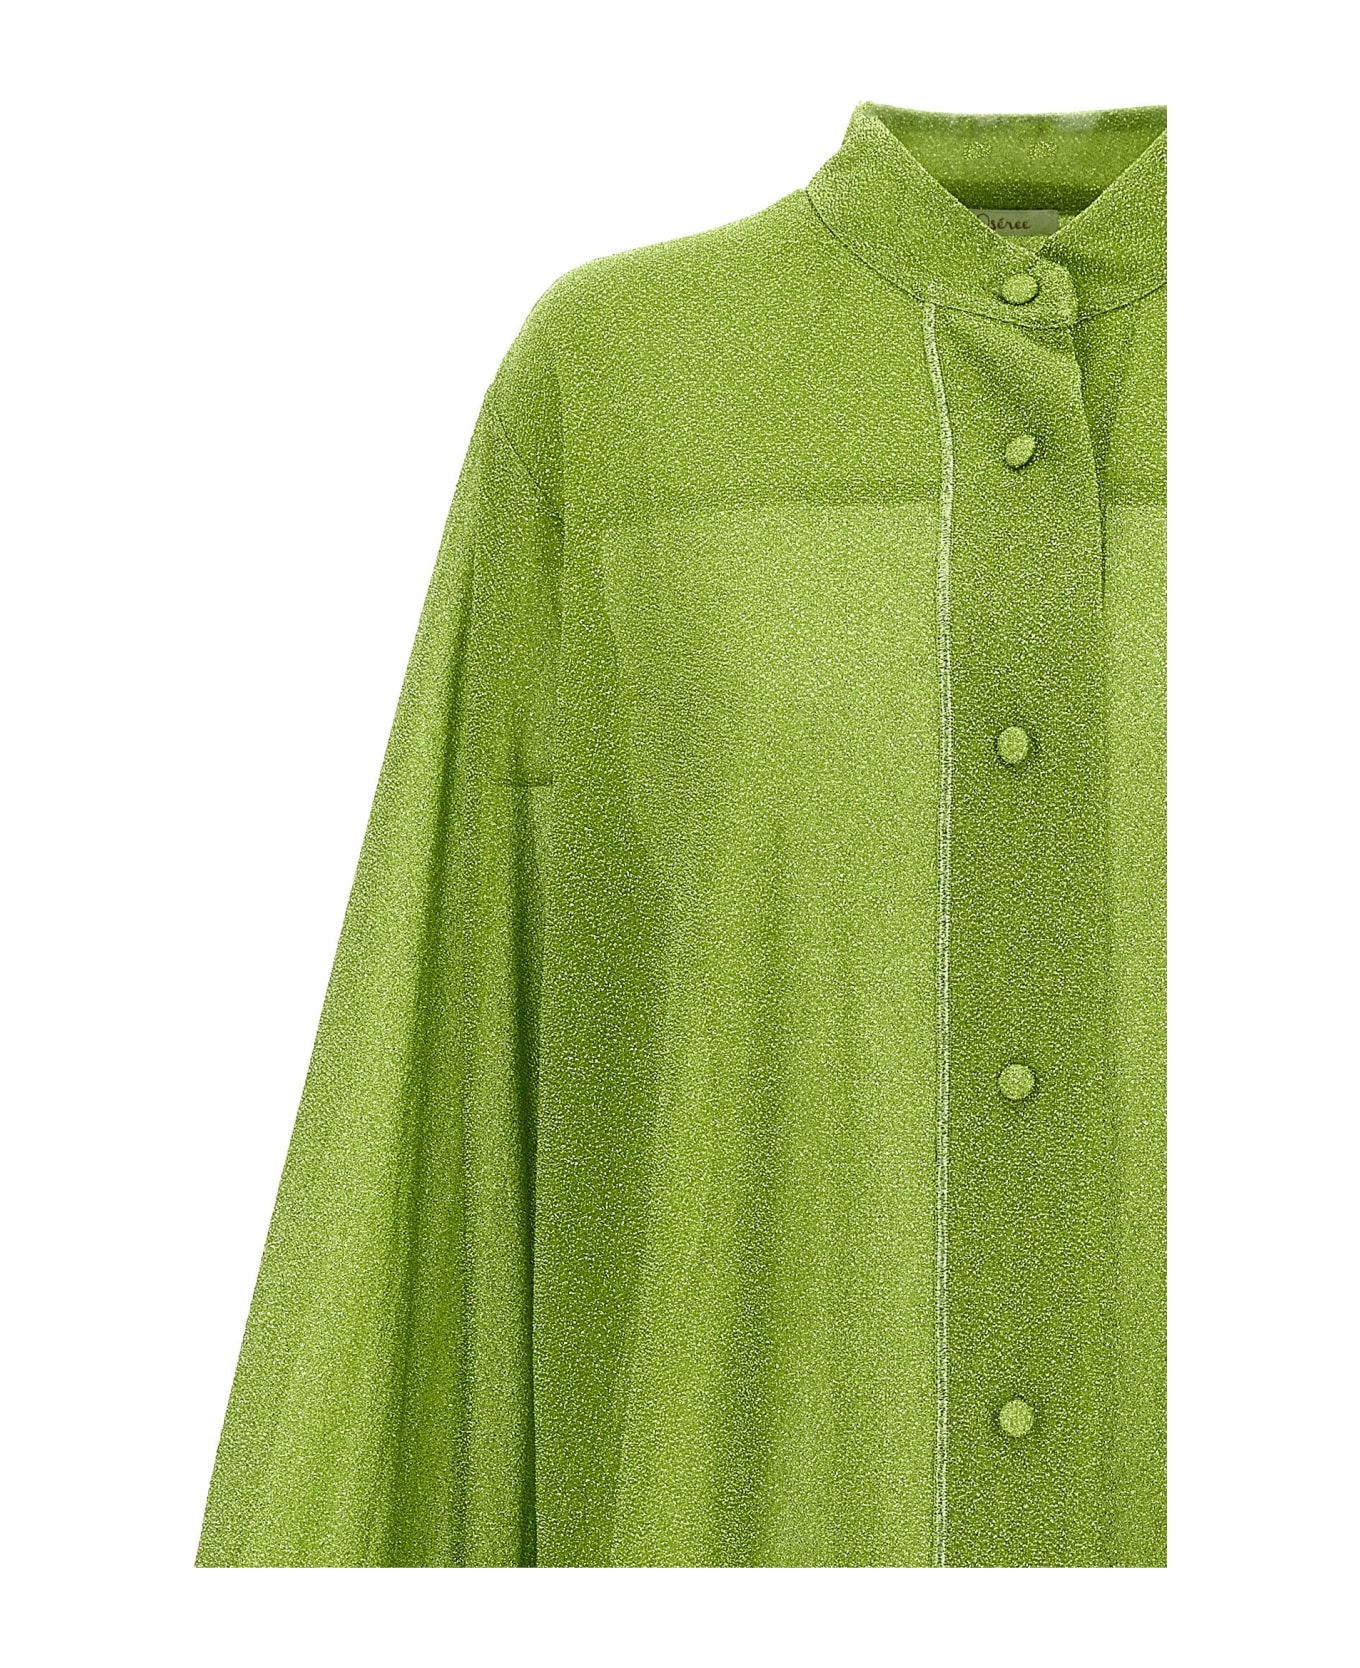 Oseree 'lumiere Plumage' Shirt - Green ブラウス